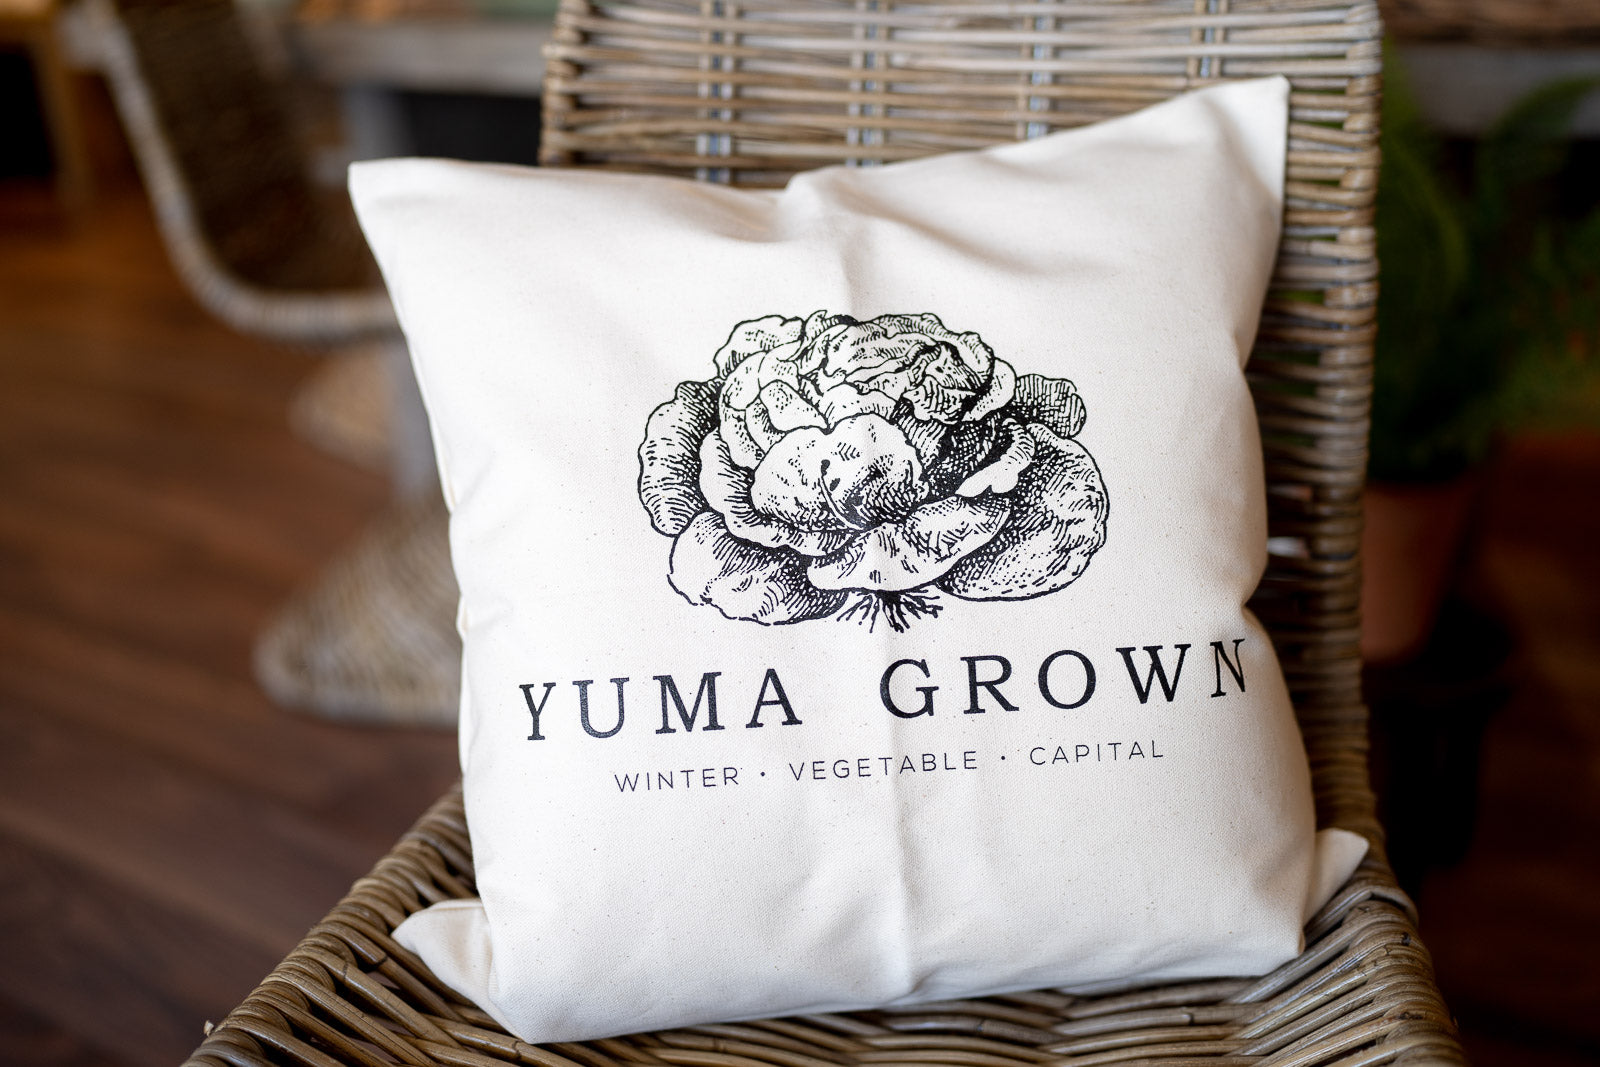 Yuma Grown Pillow